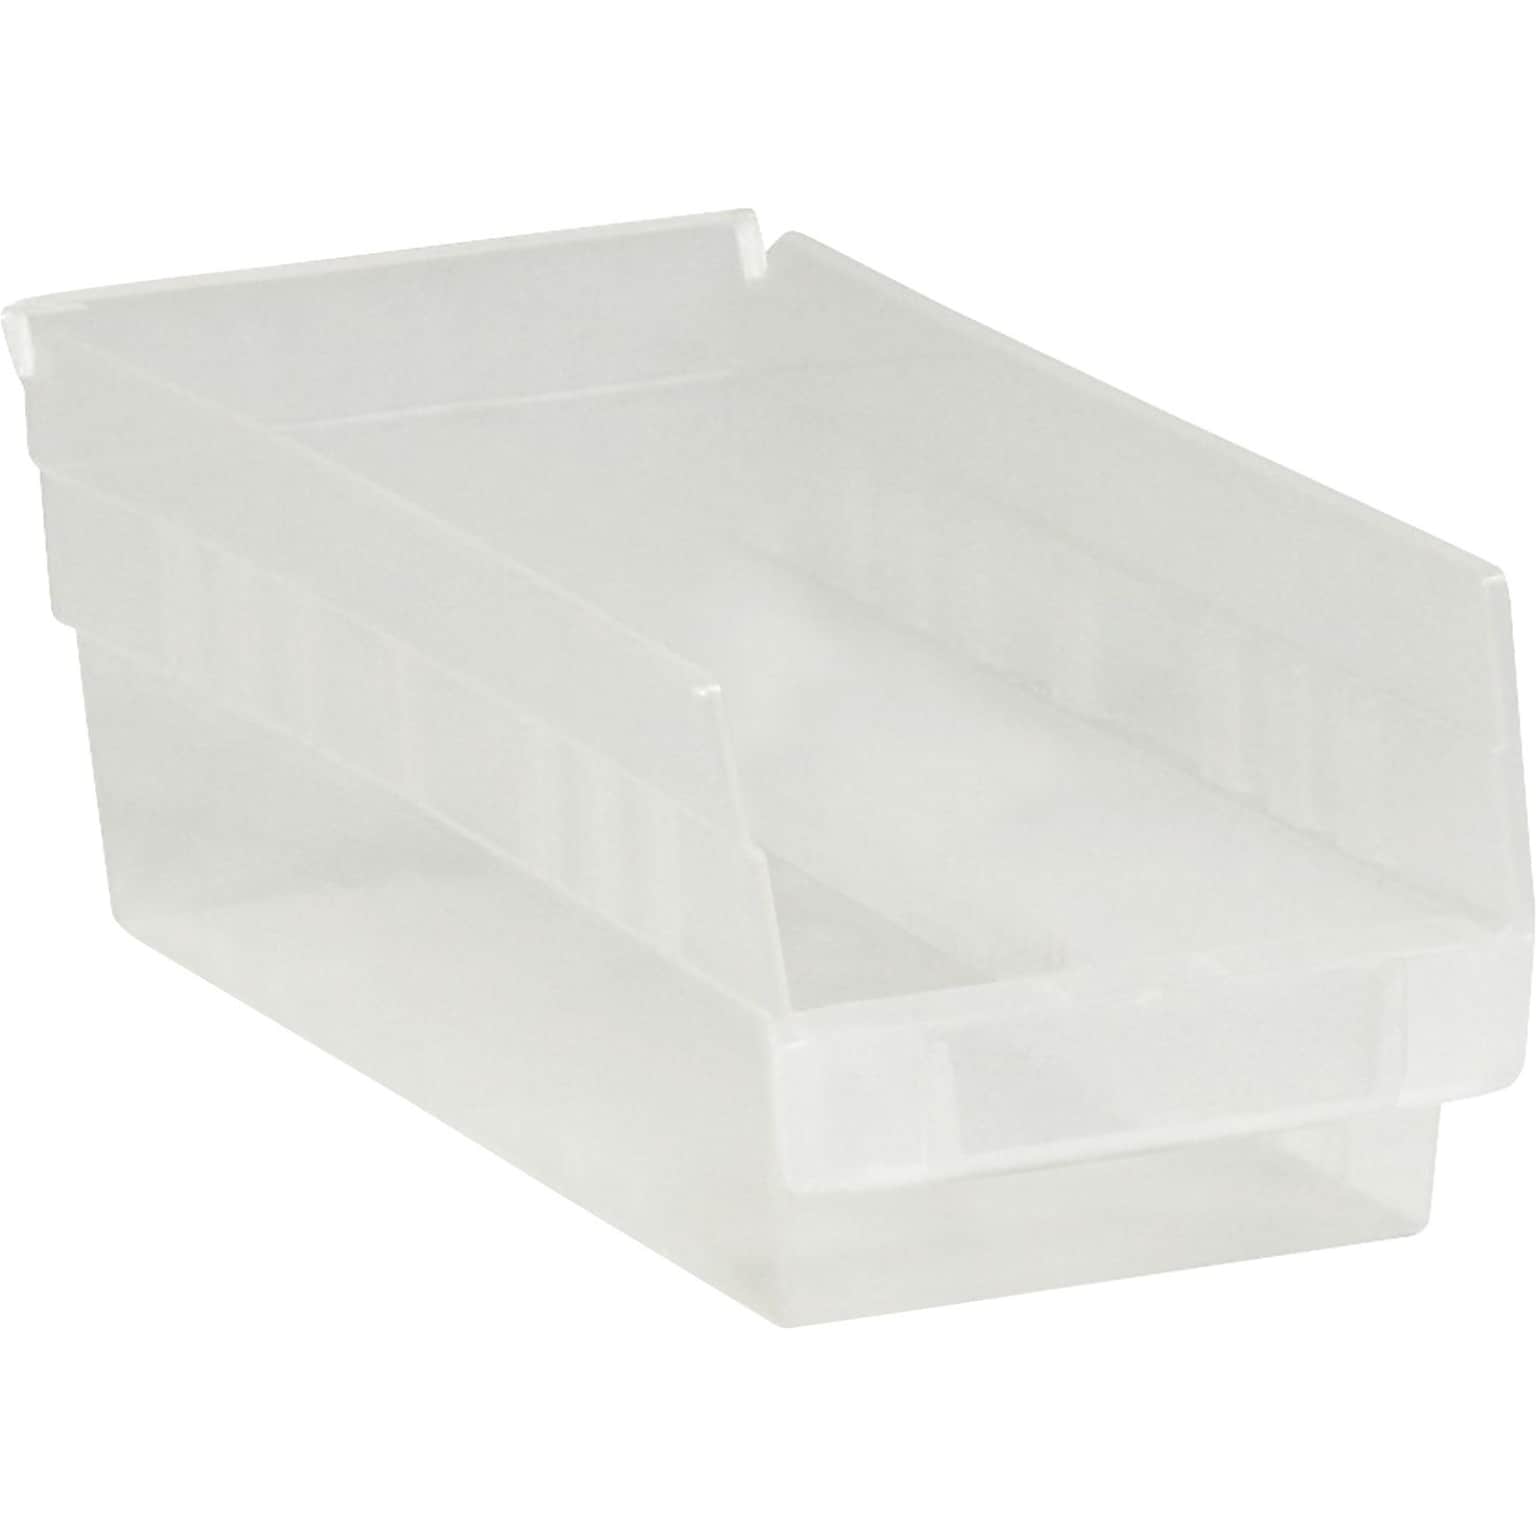 Quill Brand 11 5/8 x 6 5/8 x 4 Plastic Shelf Bin, Clear, 30/Case (BINPS103CL)